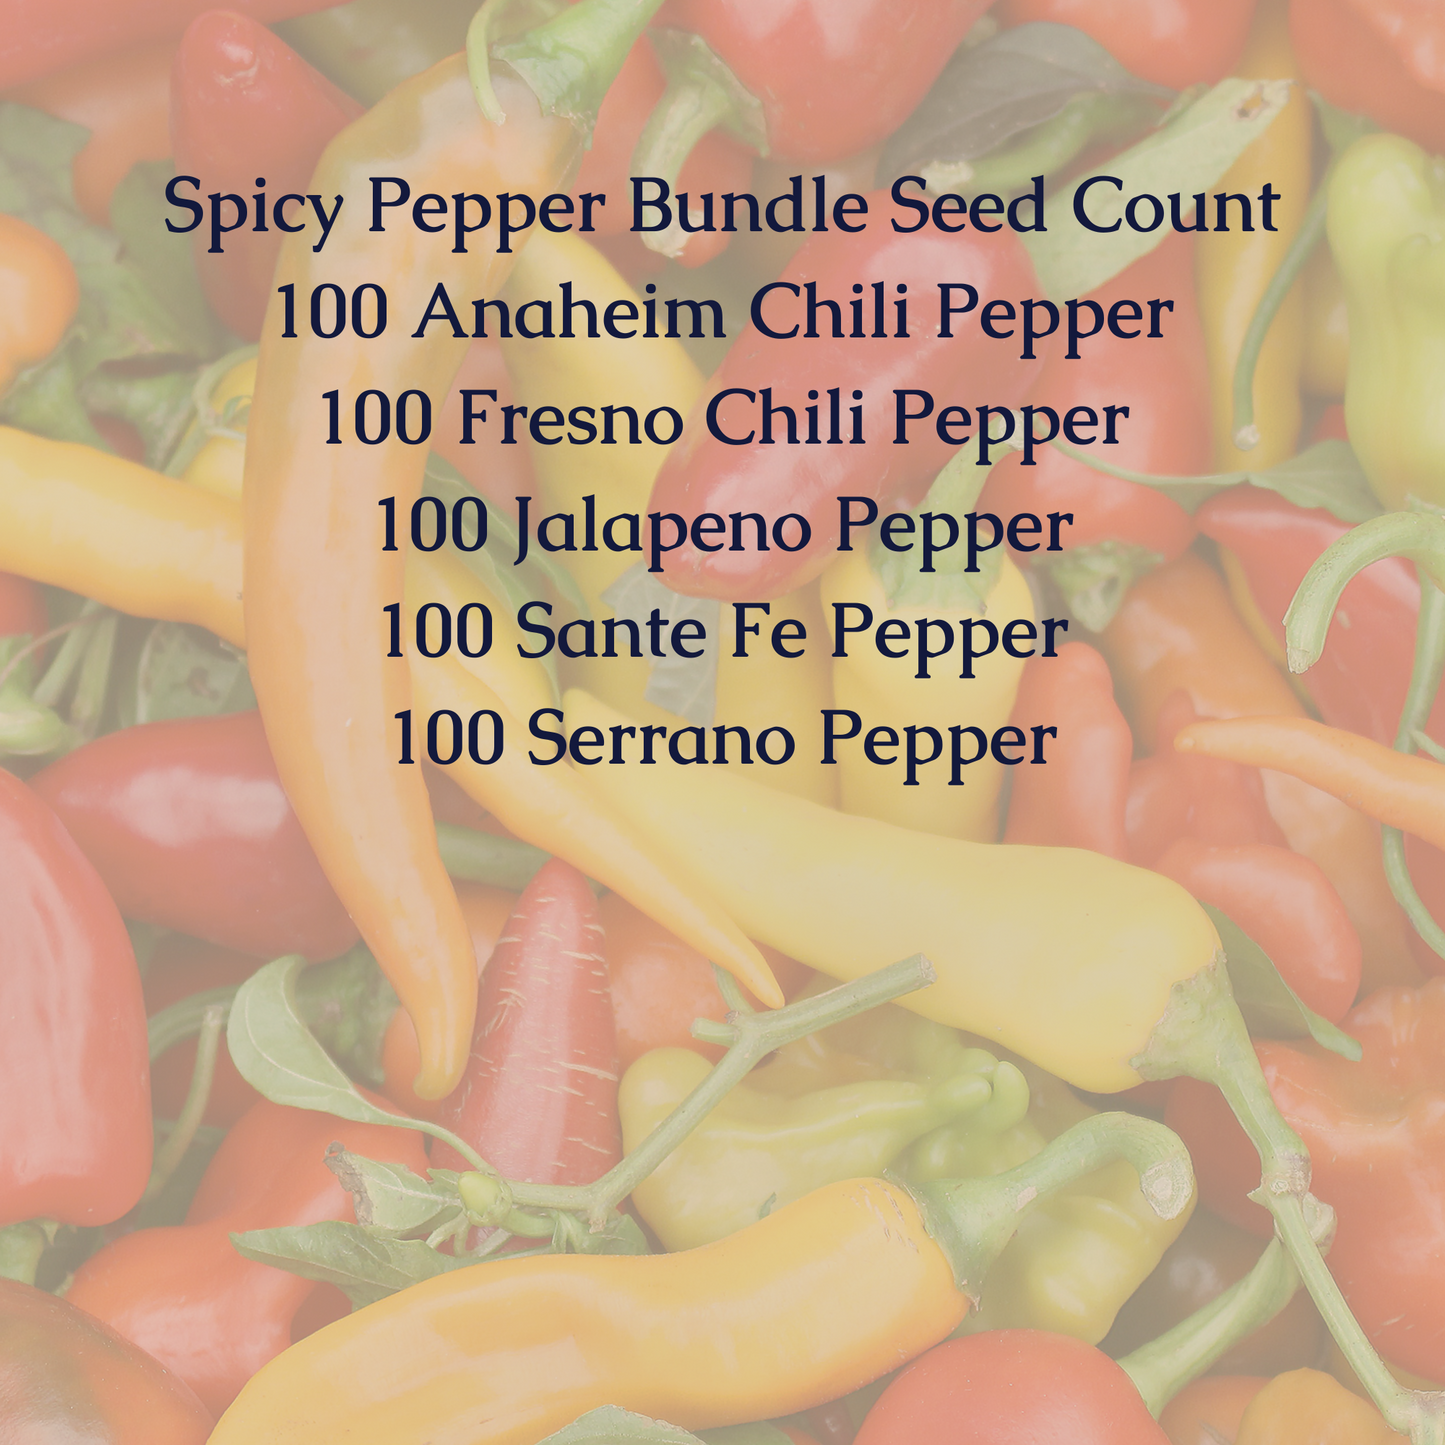 Spicy Pepper Seed Bundle